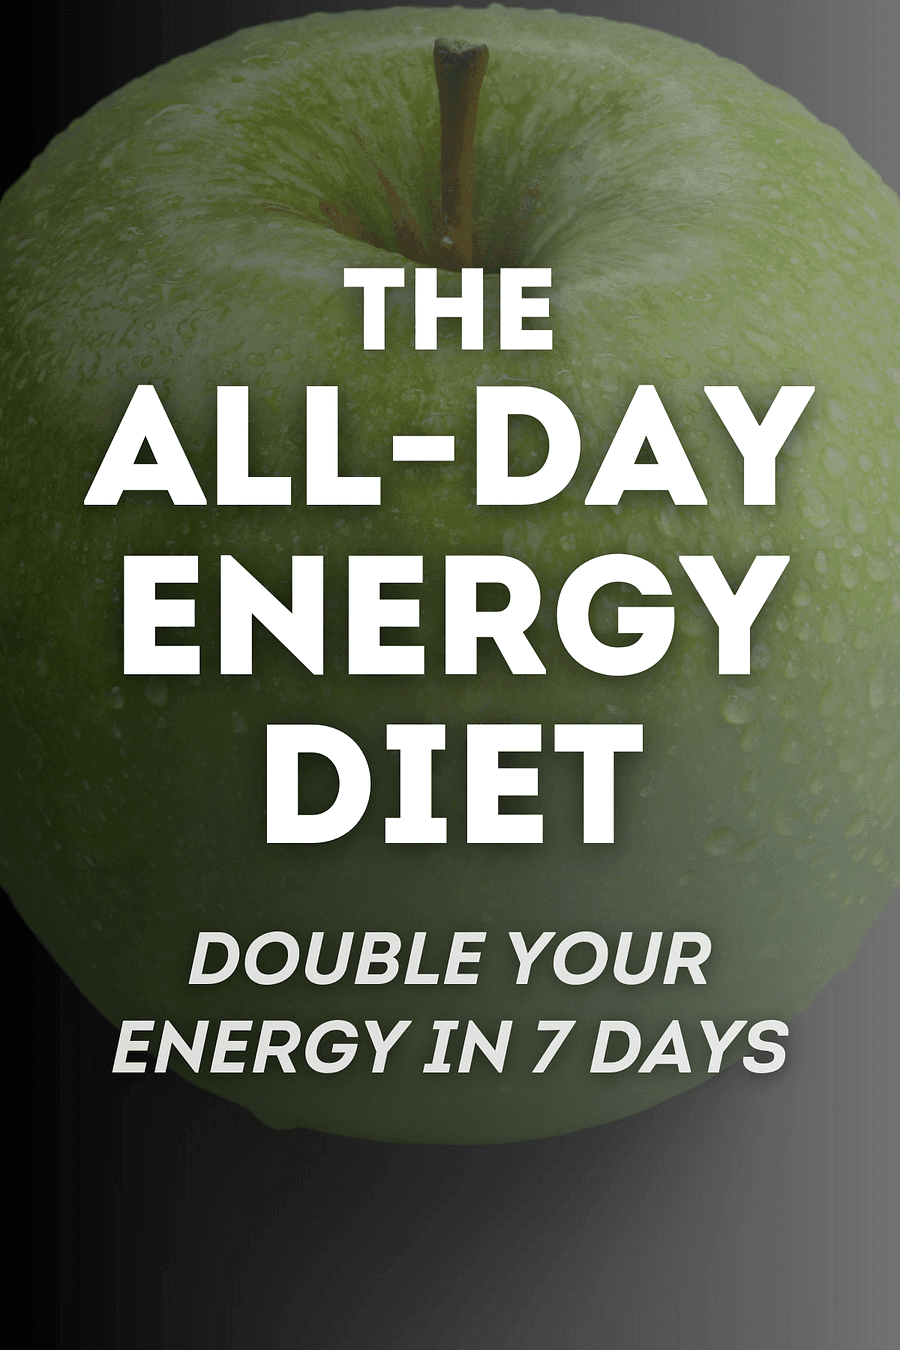 The All-Day Energy Diet by Yuri Elkaim - Book Summary